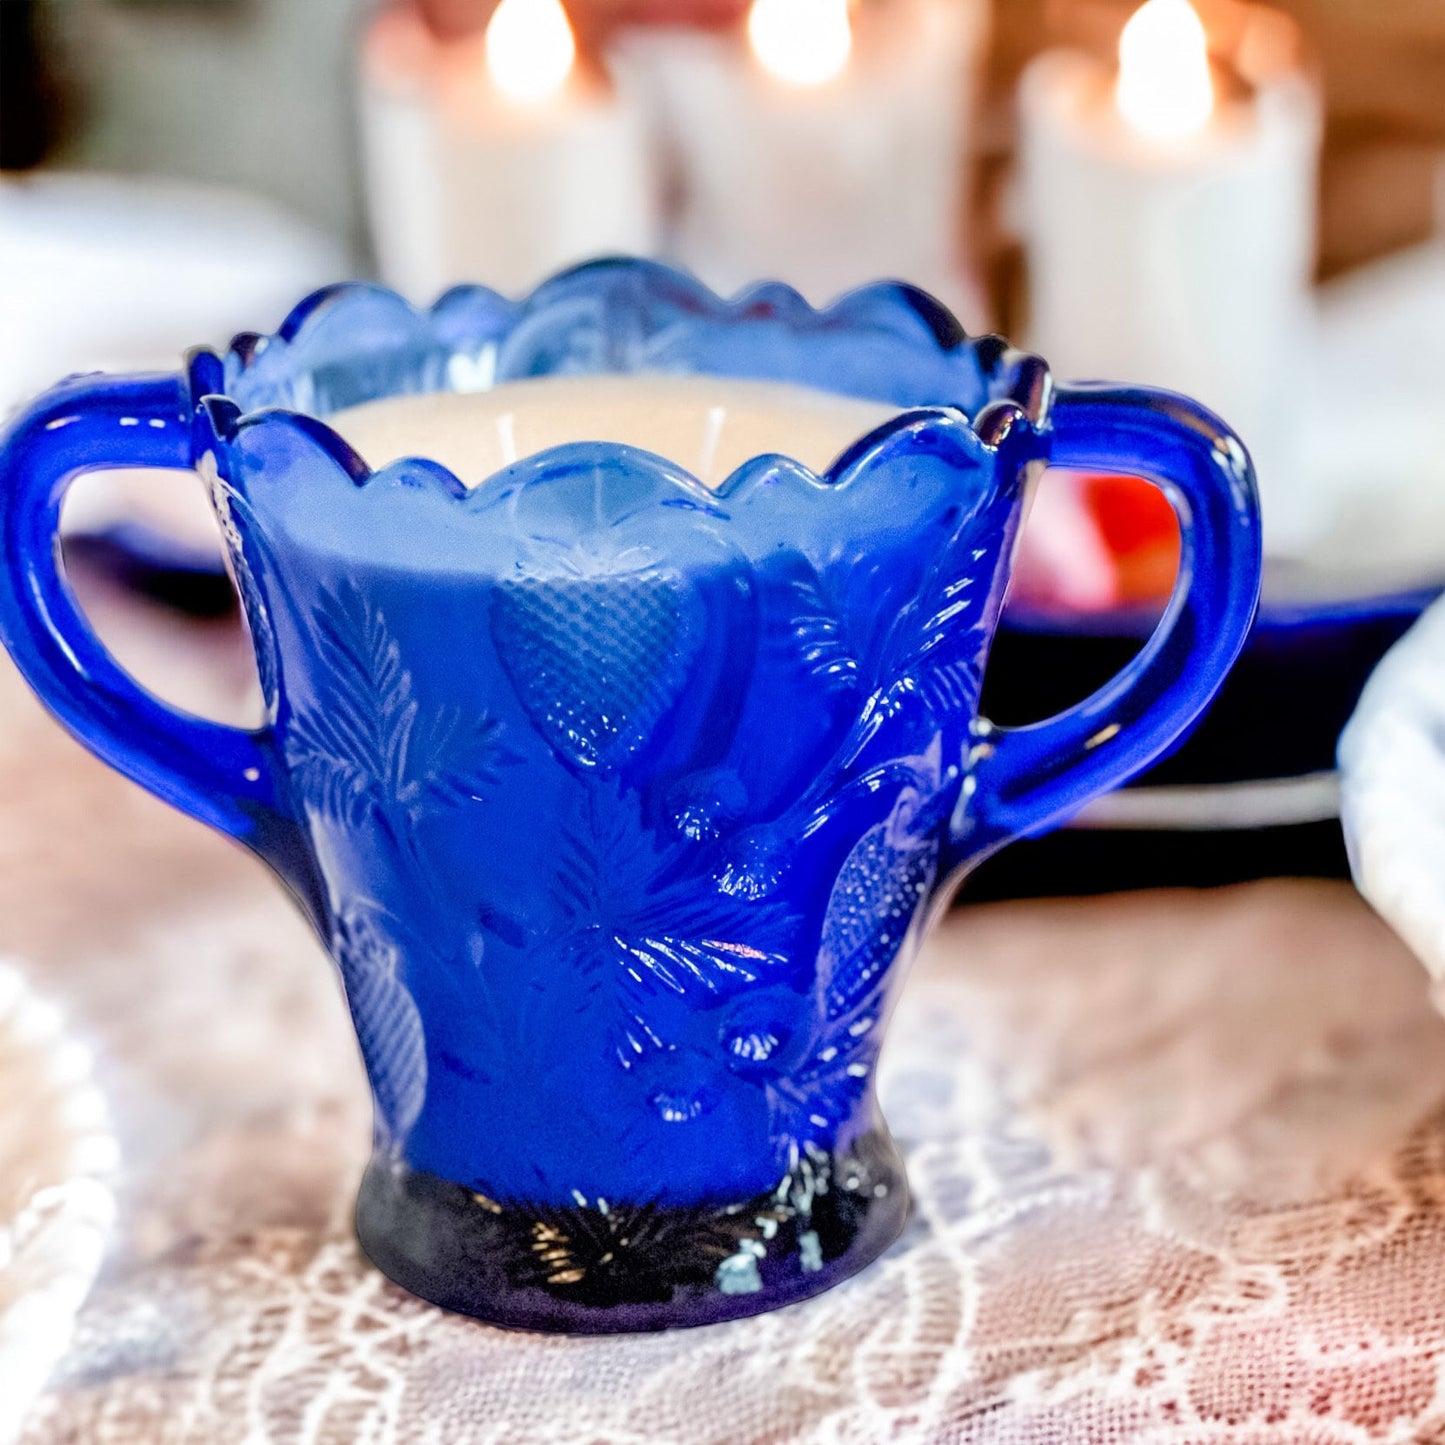 Scented Candle in Vintage Celery Vase